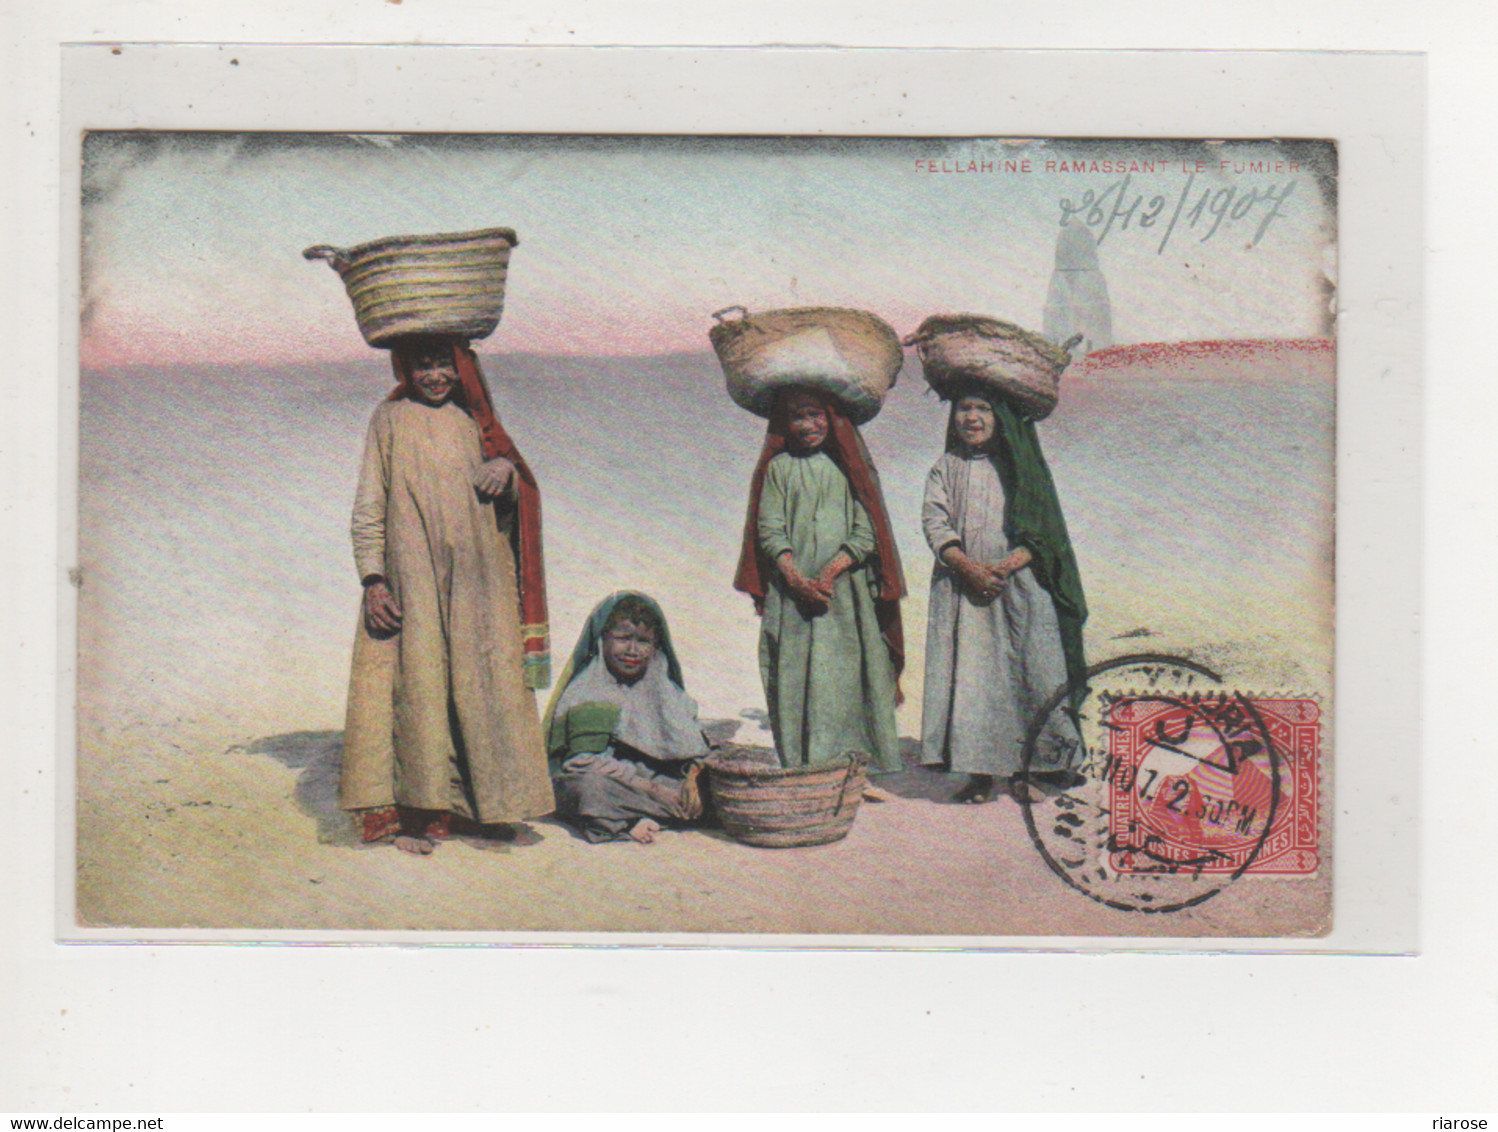 Antike Postkarte ÄGYPTEN FELLLAHINE RAMASSANT LE FUMIER - Dessouk